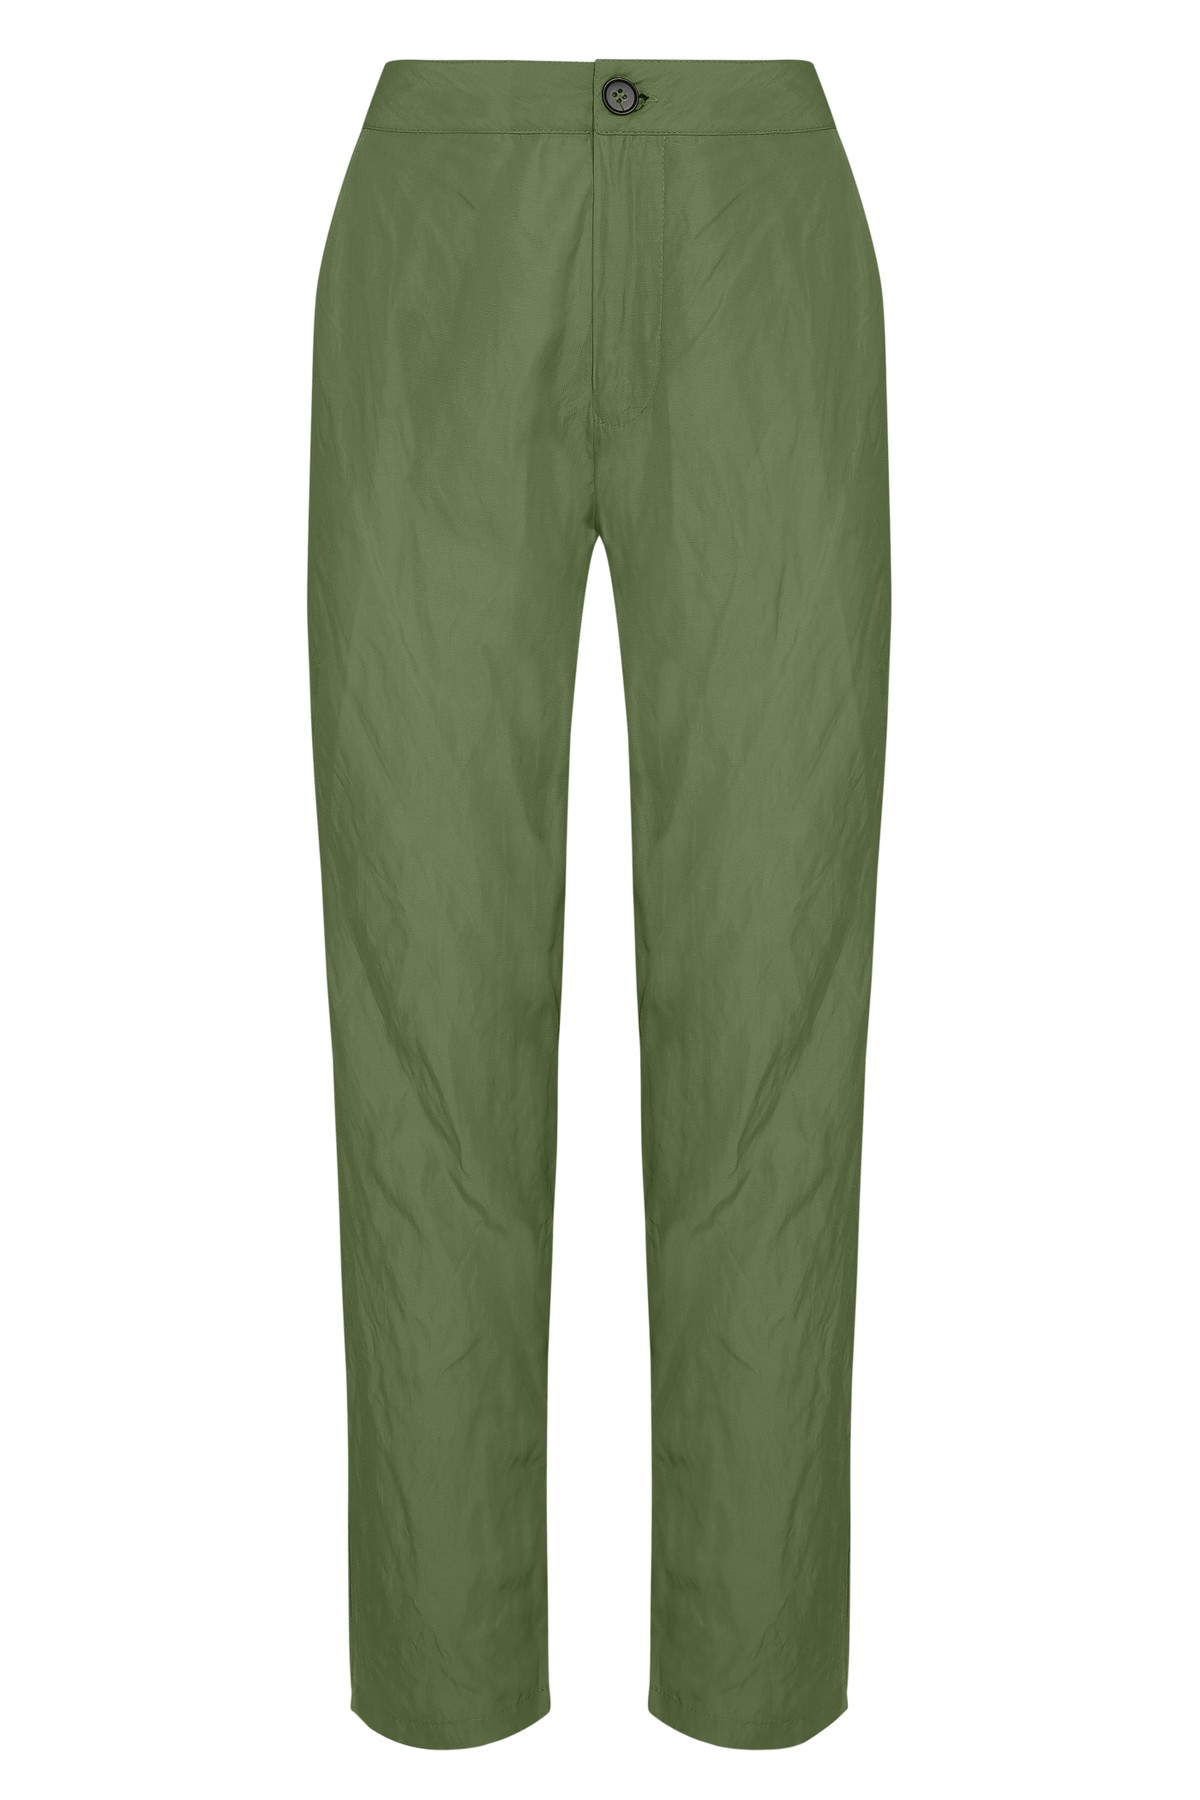 calça reta de alfaiataria efeito amassado | crinkled tailoring pants with buttons detail